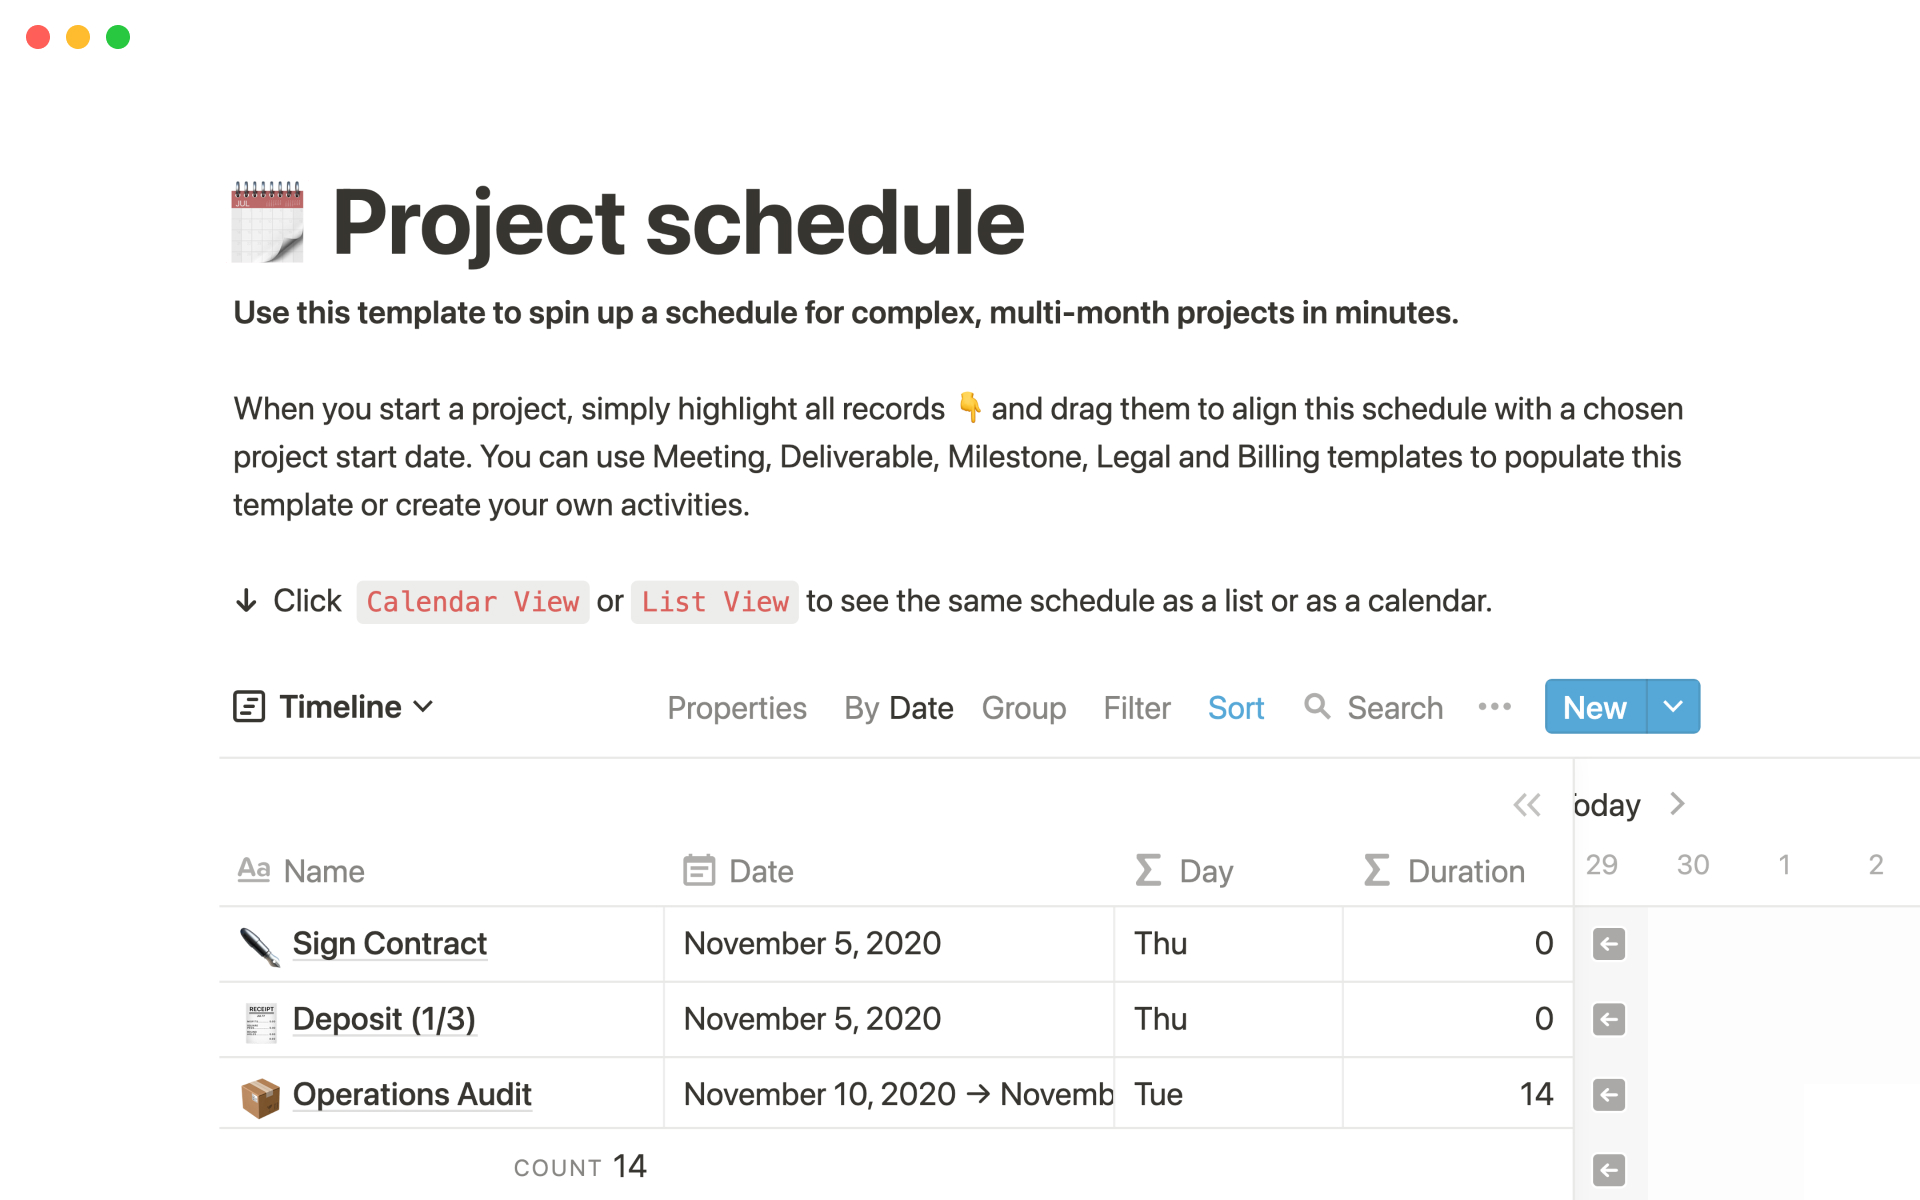 Project-schedule-template-desktop-image